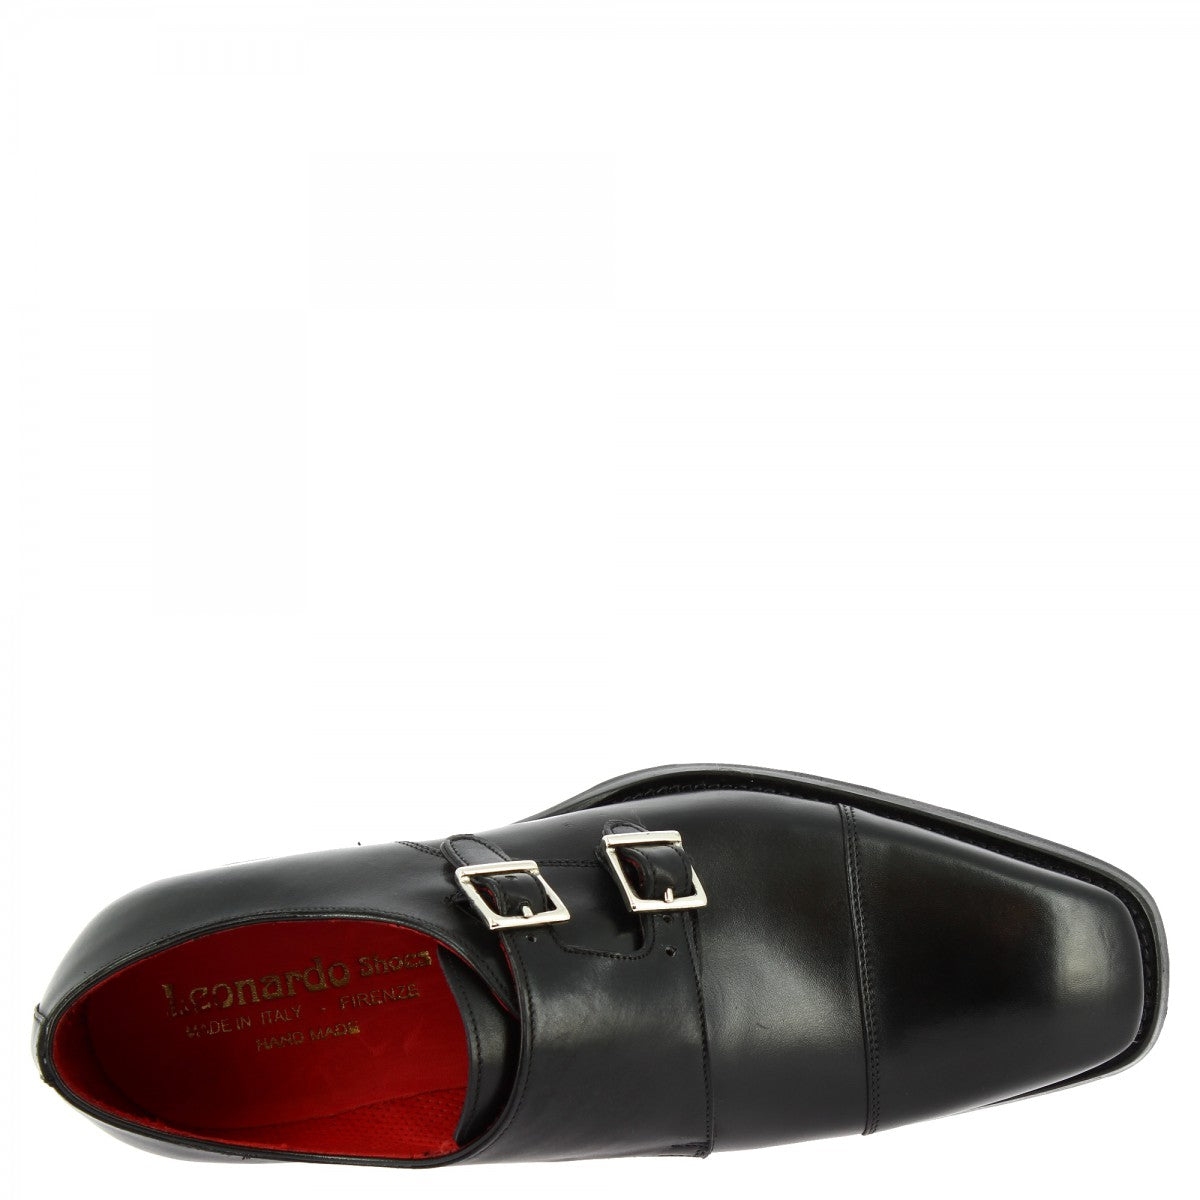 Men's handmade black calf leather double buckle dress shoes